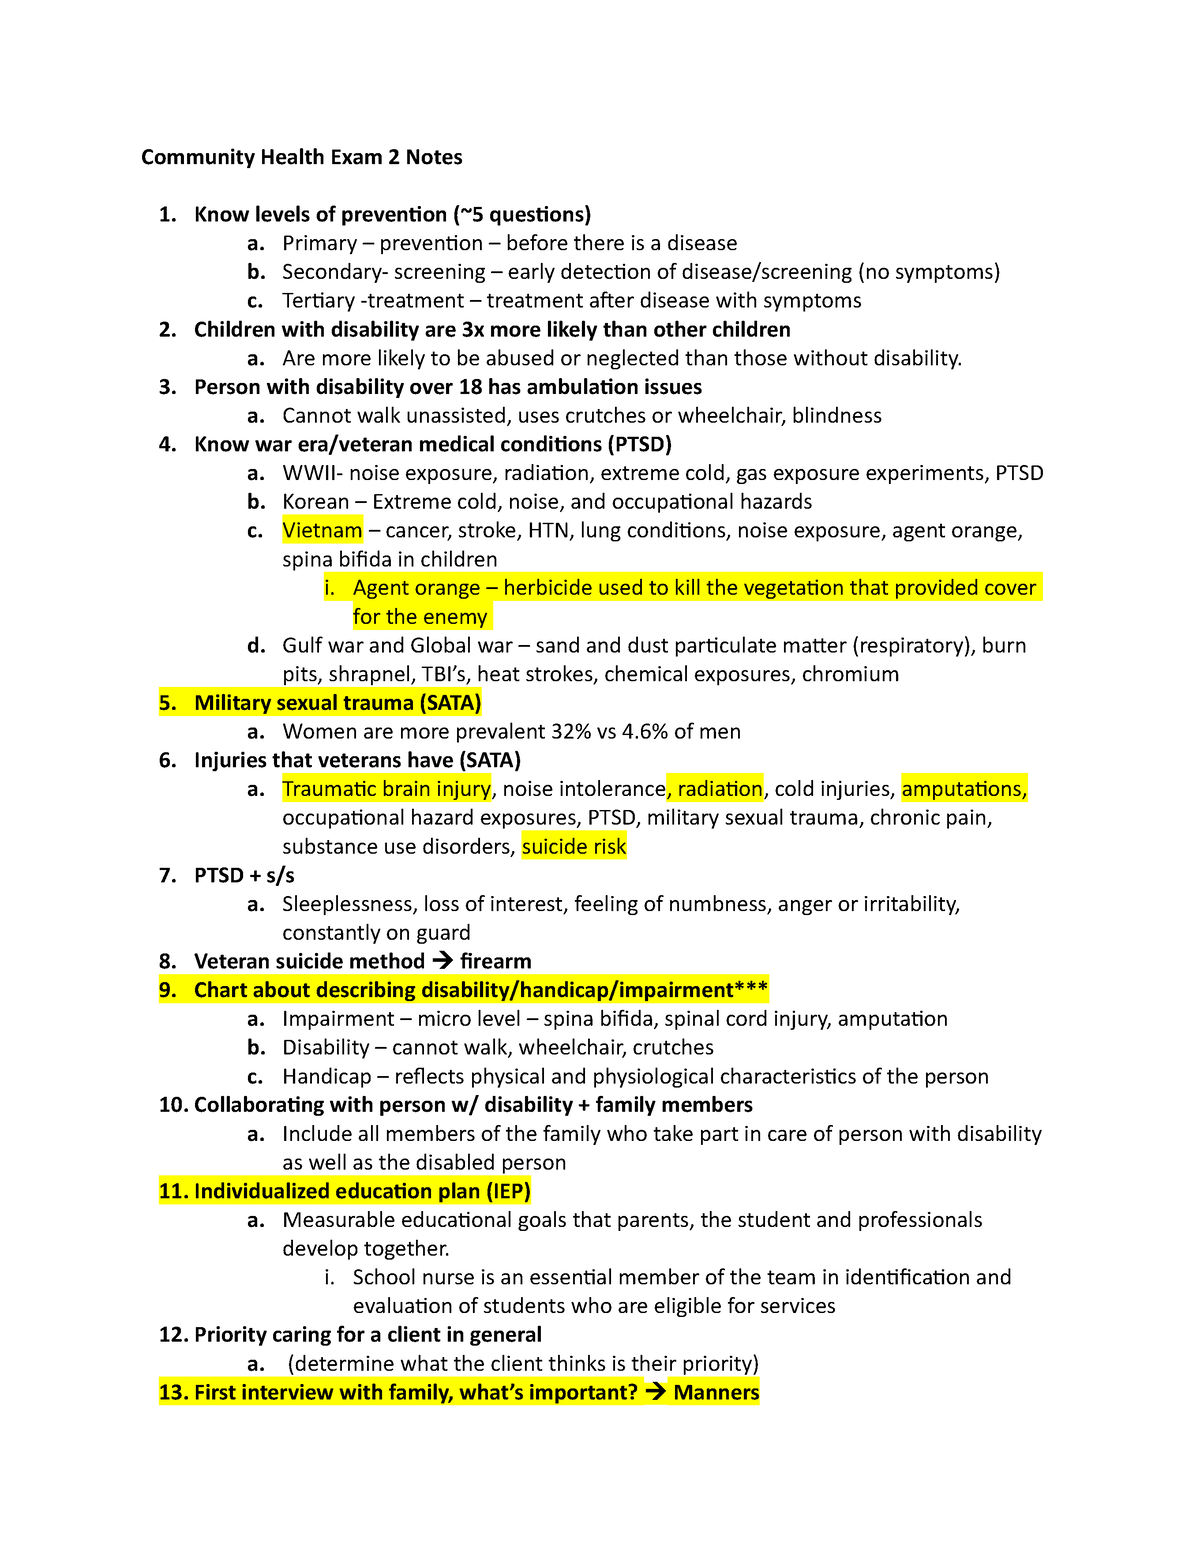 PH exam 2 - notes from Prof Walden's course containing exam 2 material -  PUBLIC HEALTH EXAM 2 - Studocu